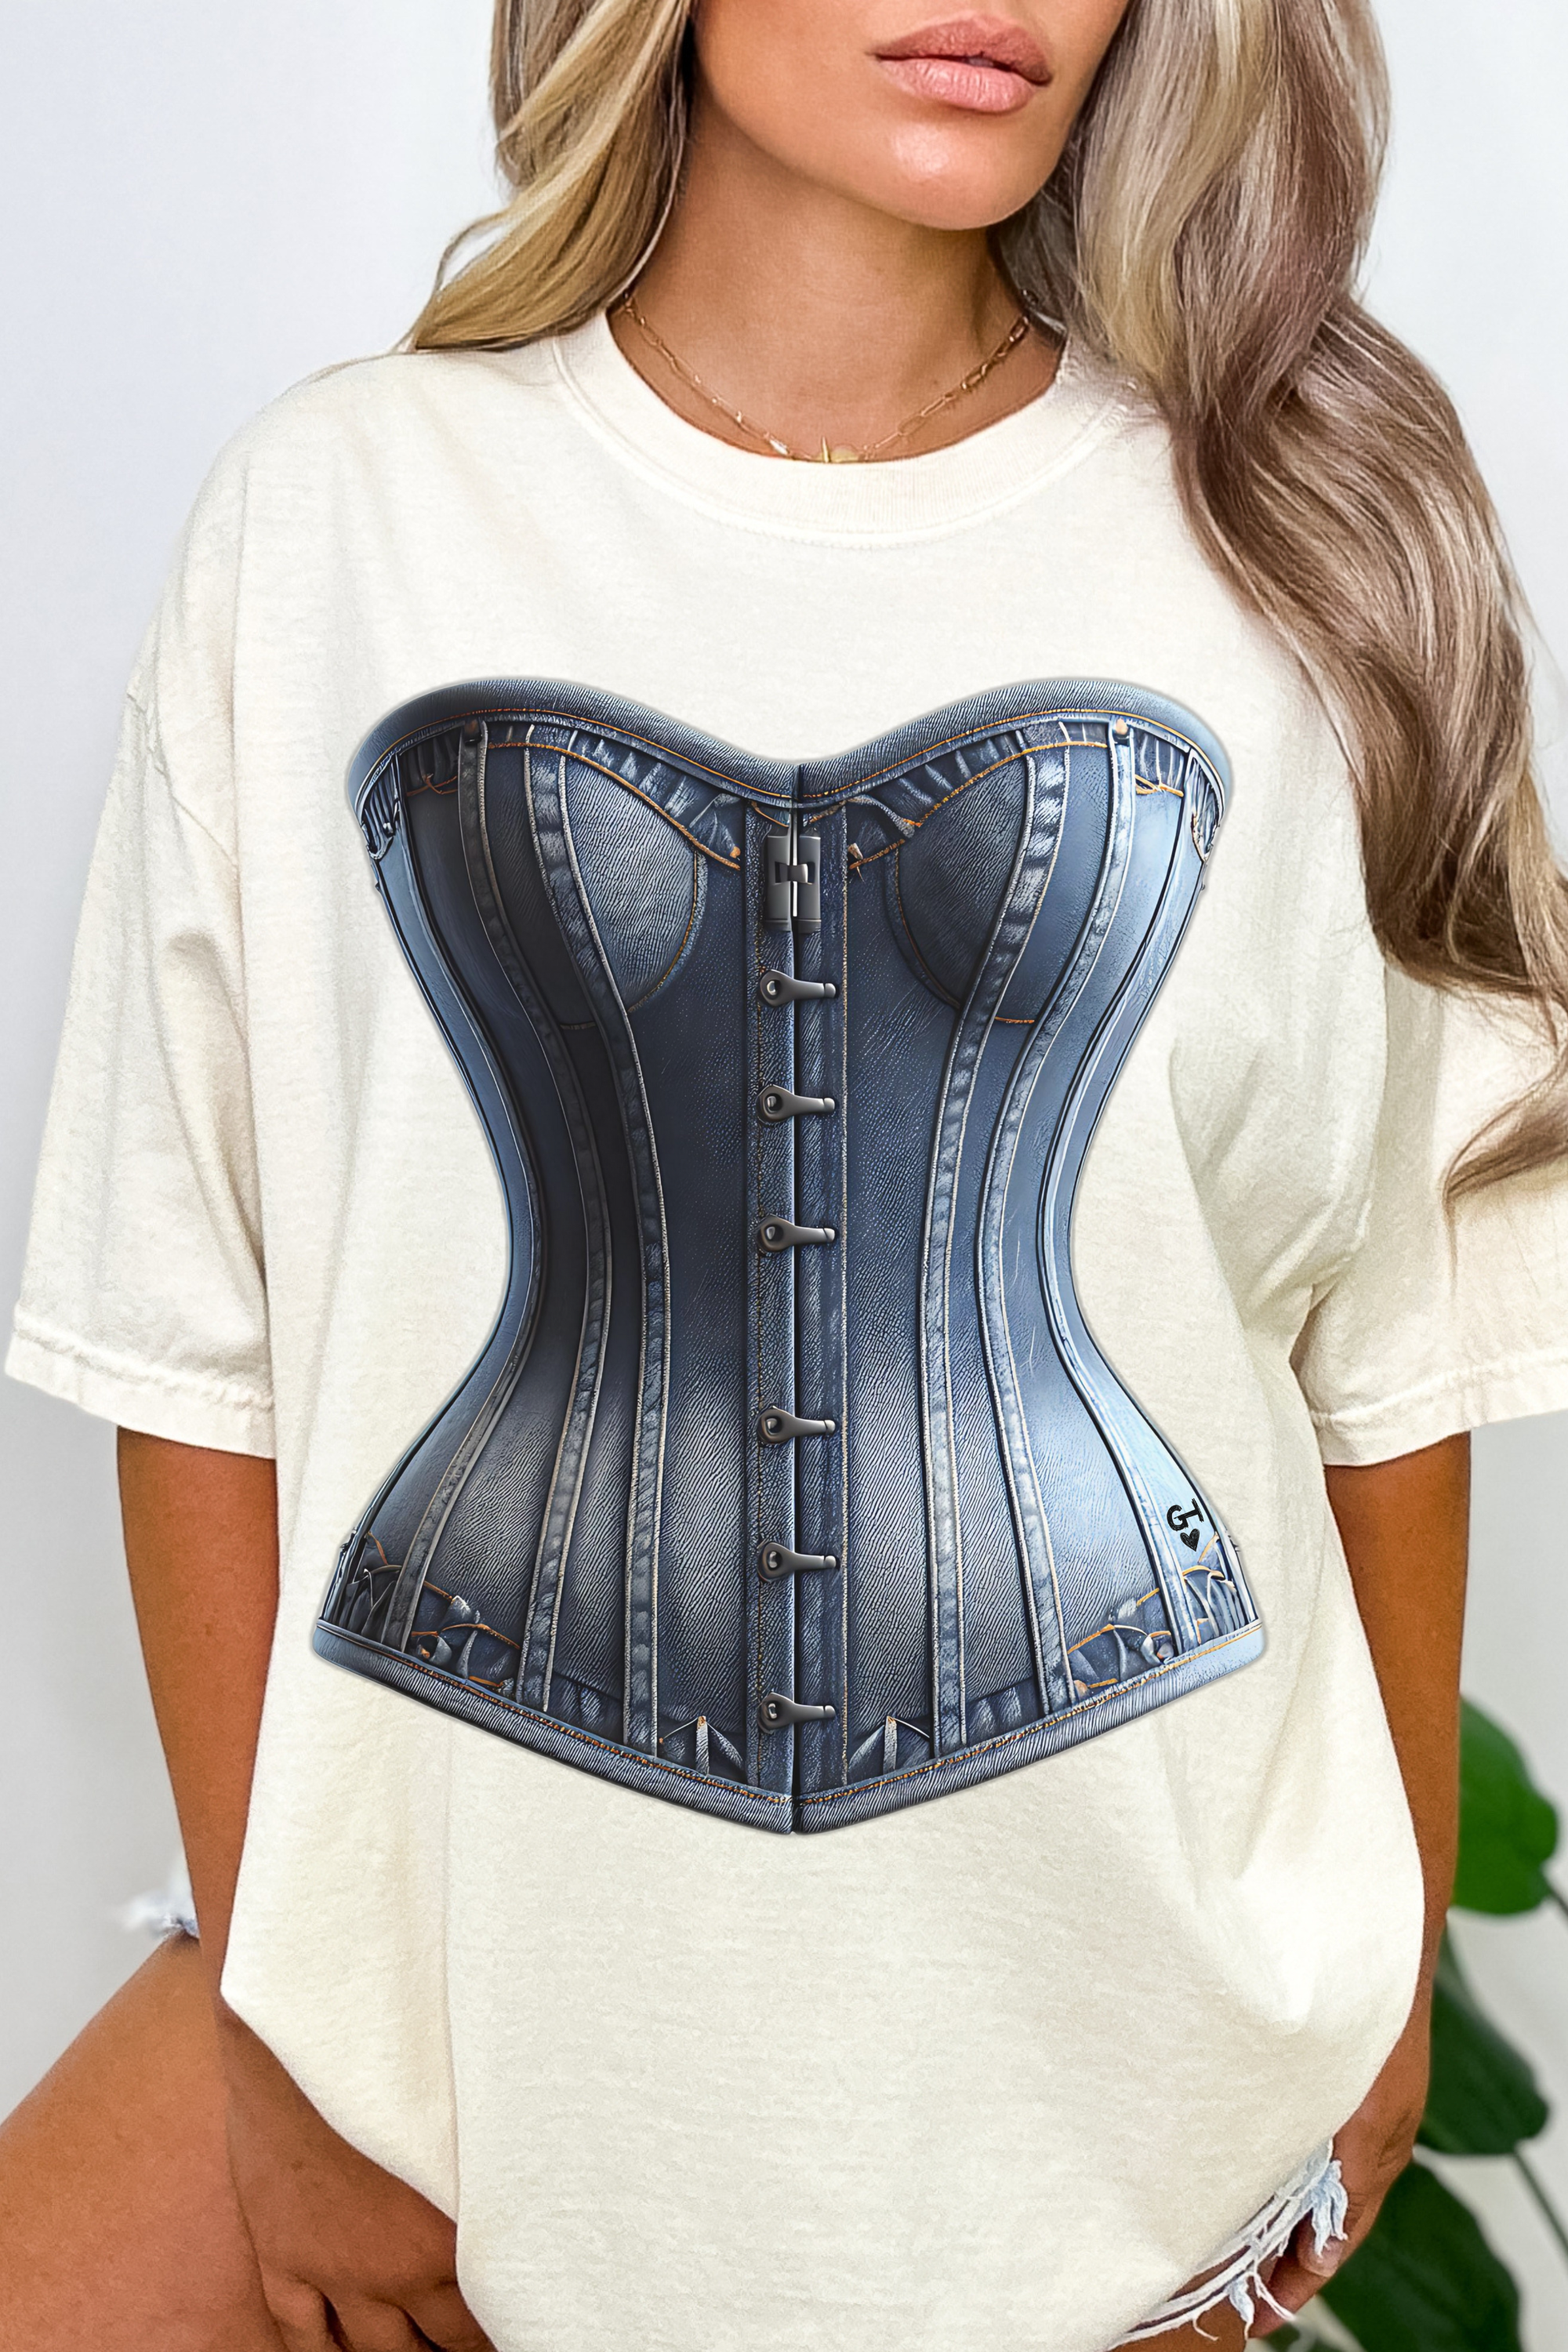 GOLDxTEAL  stylish corset graphic t-shirt.